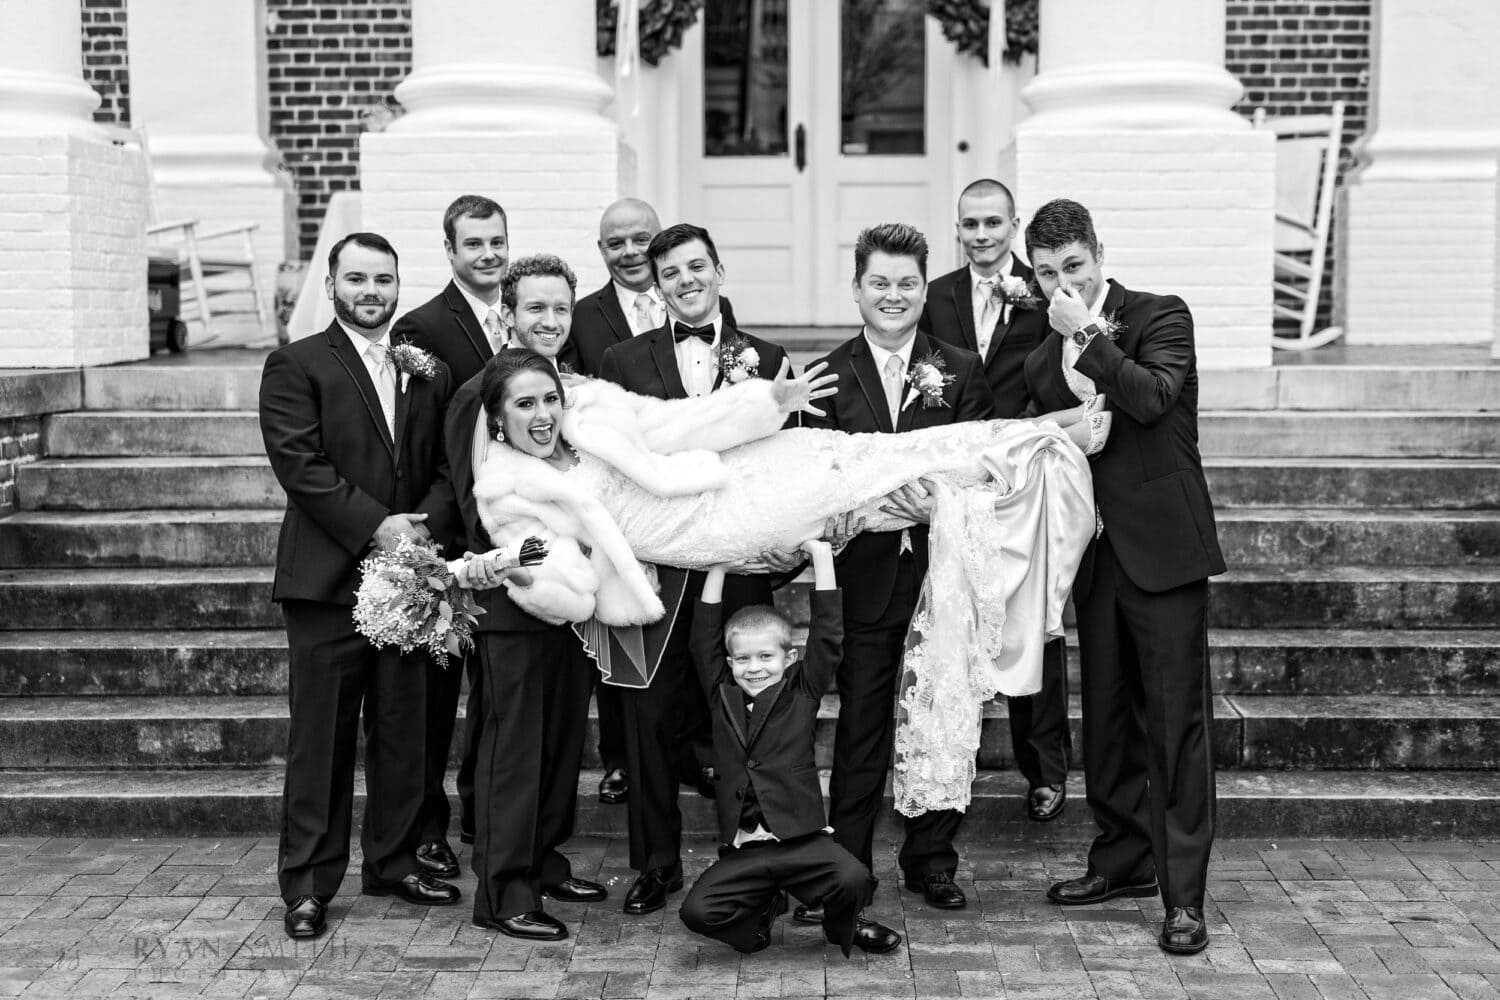 Groom and groomsmen having fun lifting up the bride - Rosewood Manor, Marion